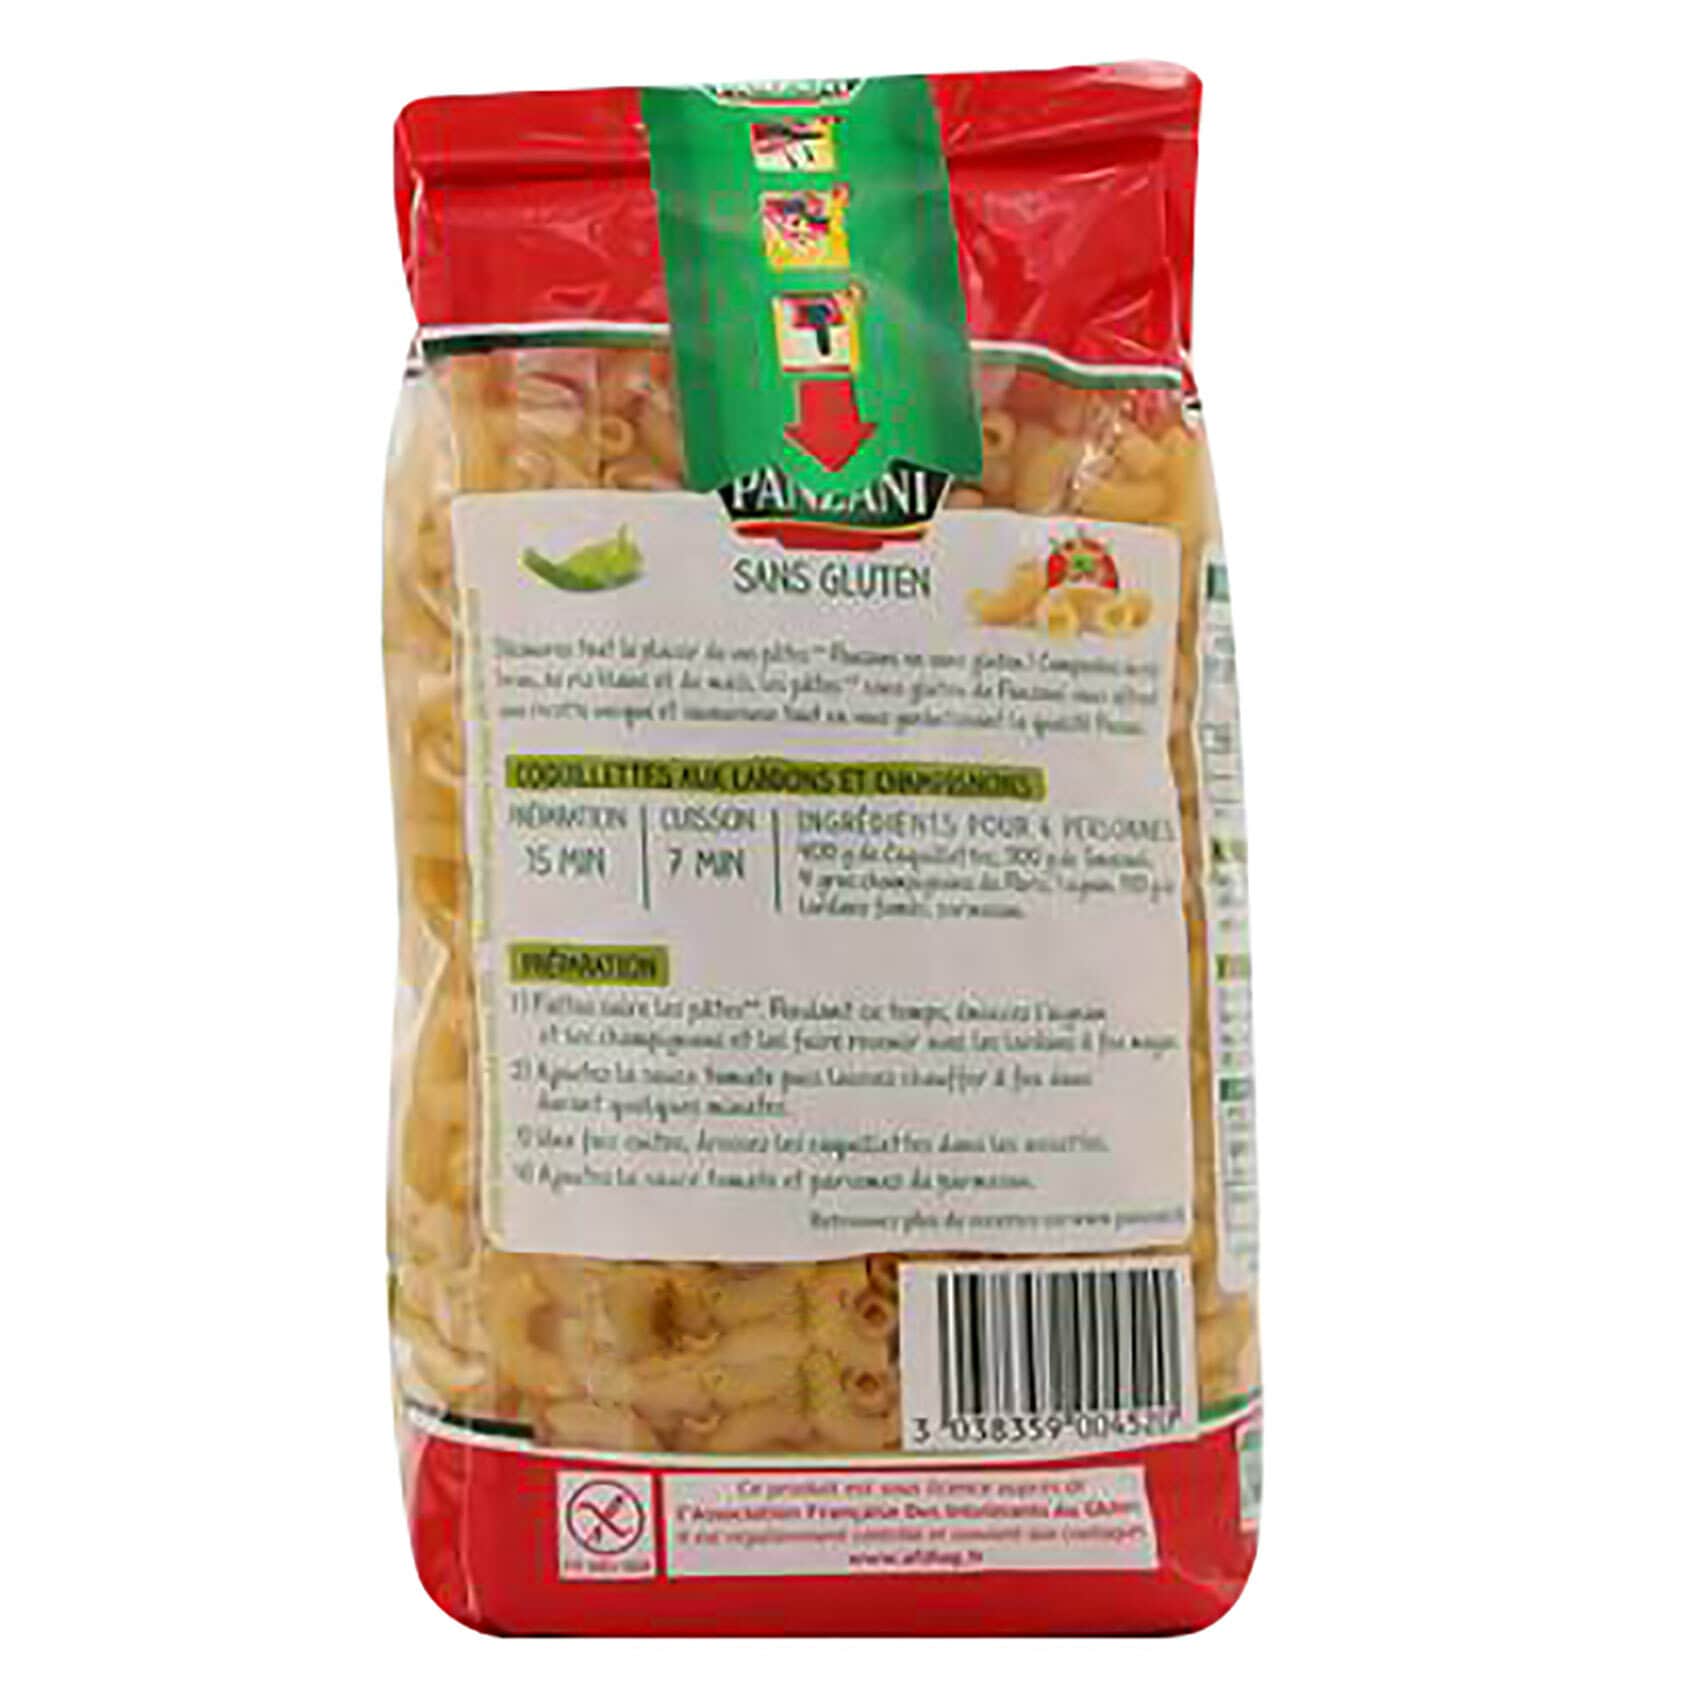 Buy Panzani Elbow Gluten Free Pasta 400g Online - Shop Bio & Organic ...